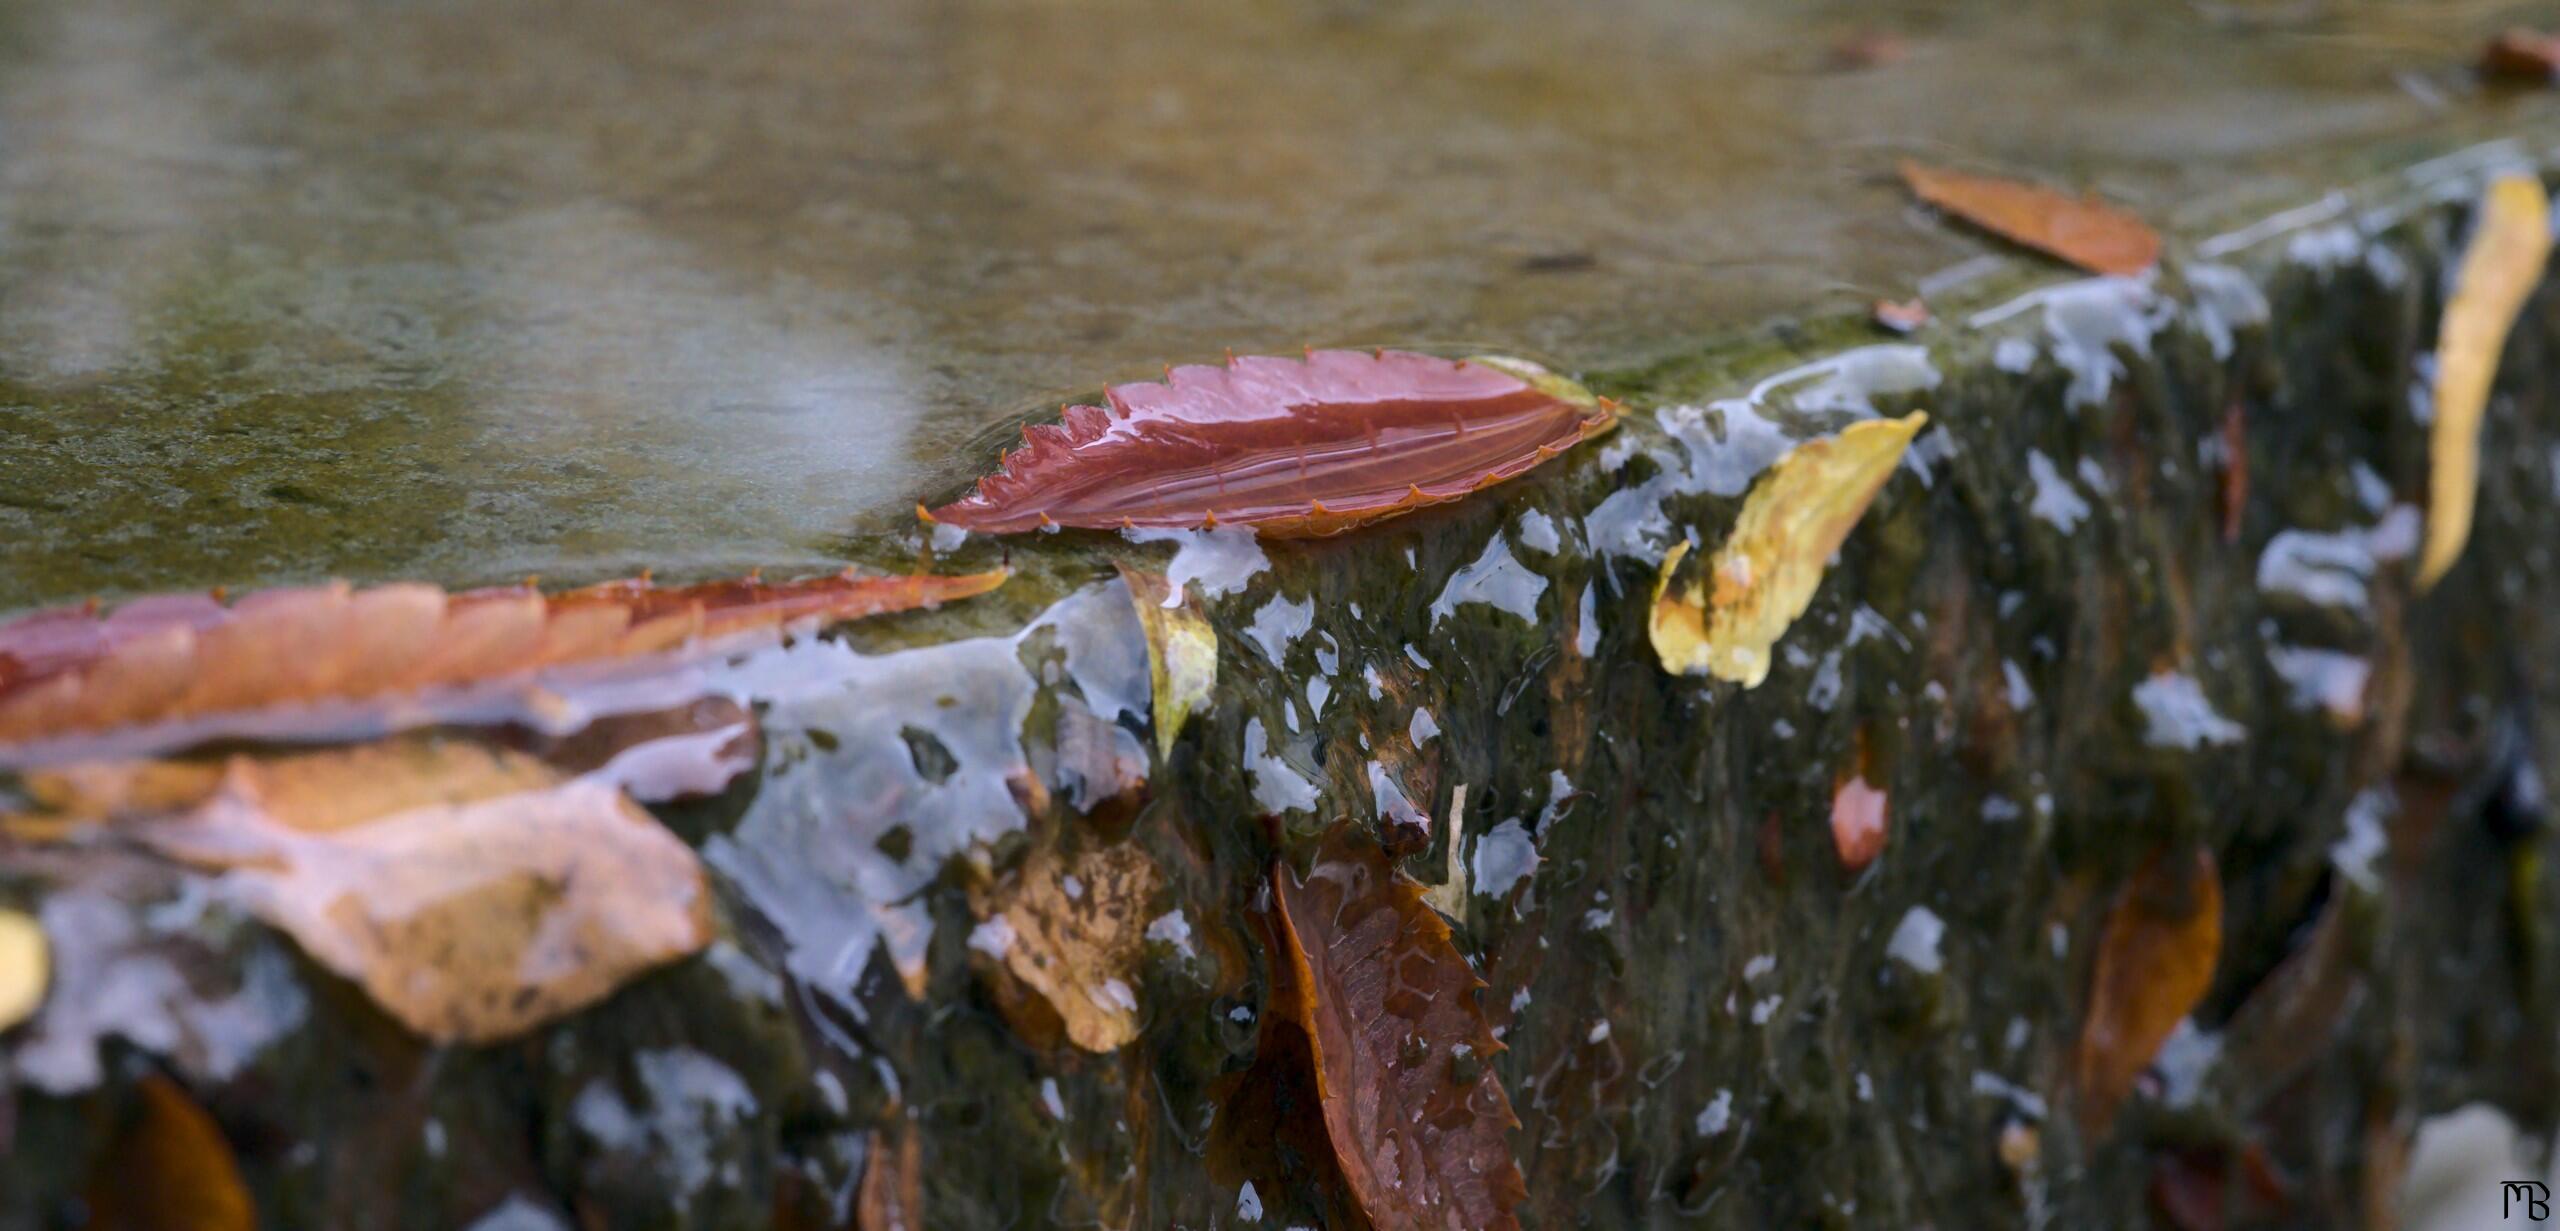 Orange leaf at edge of water fall